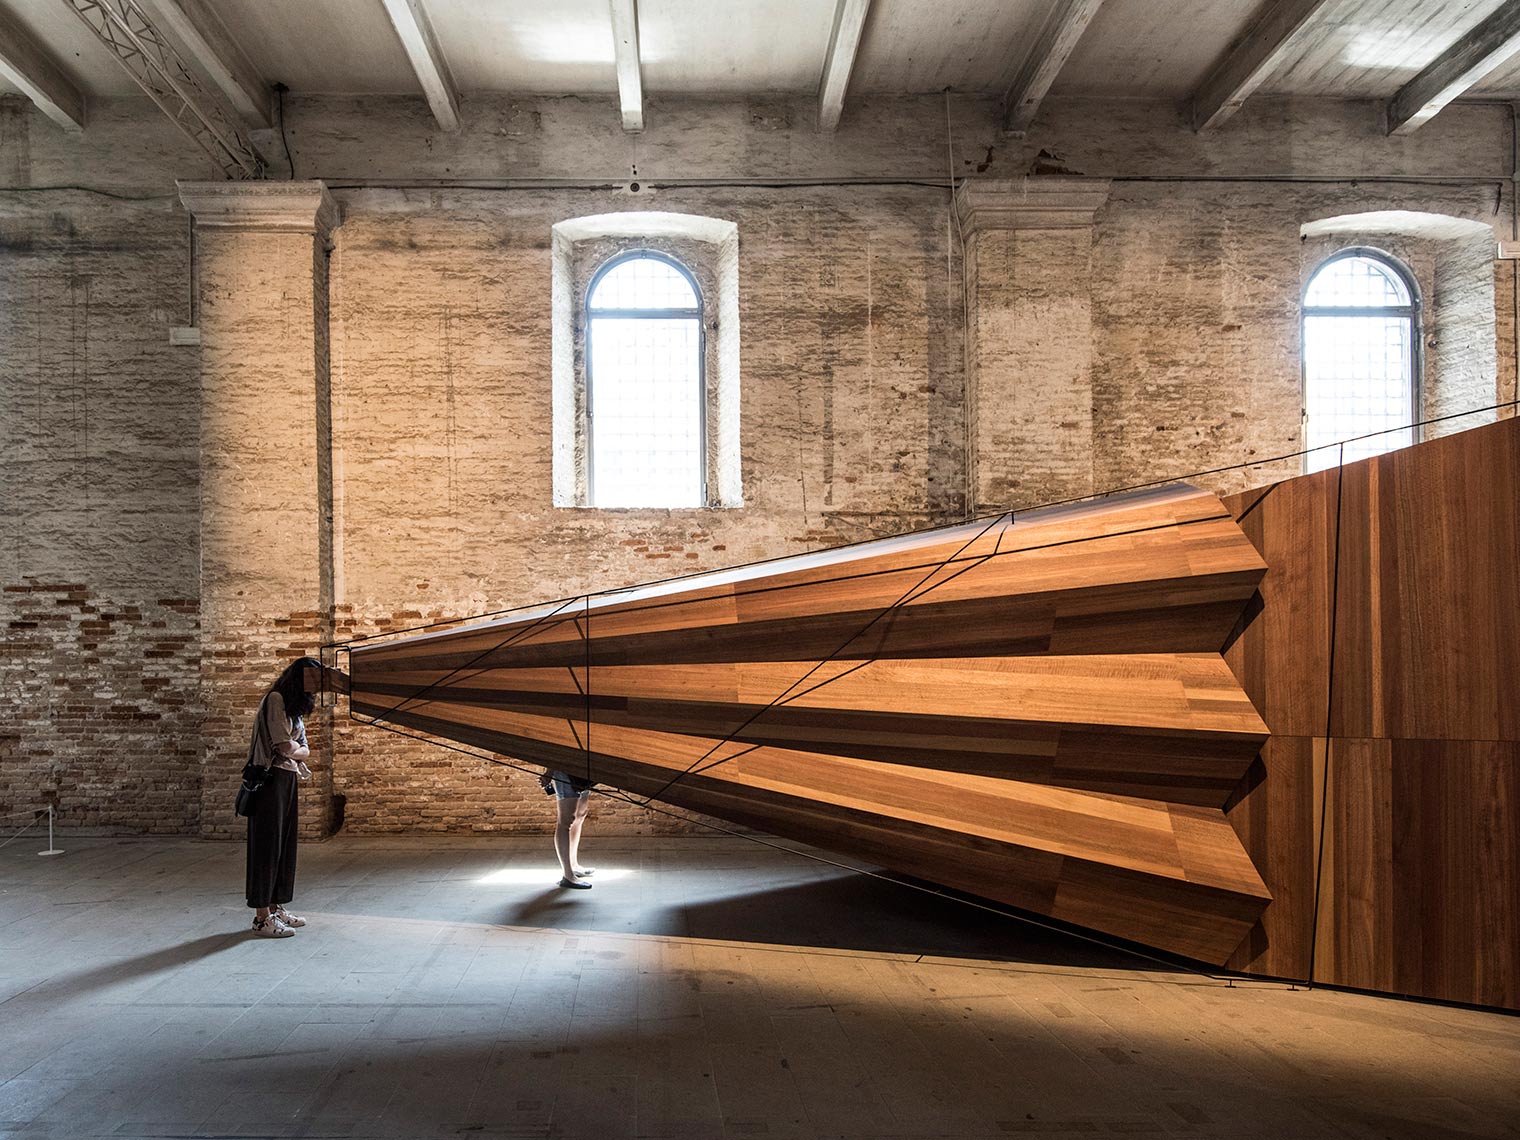 JOHN WARDLE | Venice Architectural Biennale